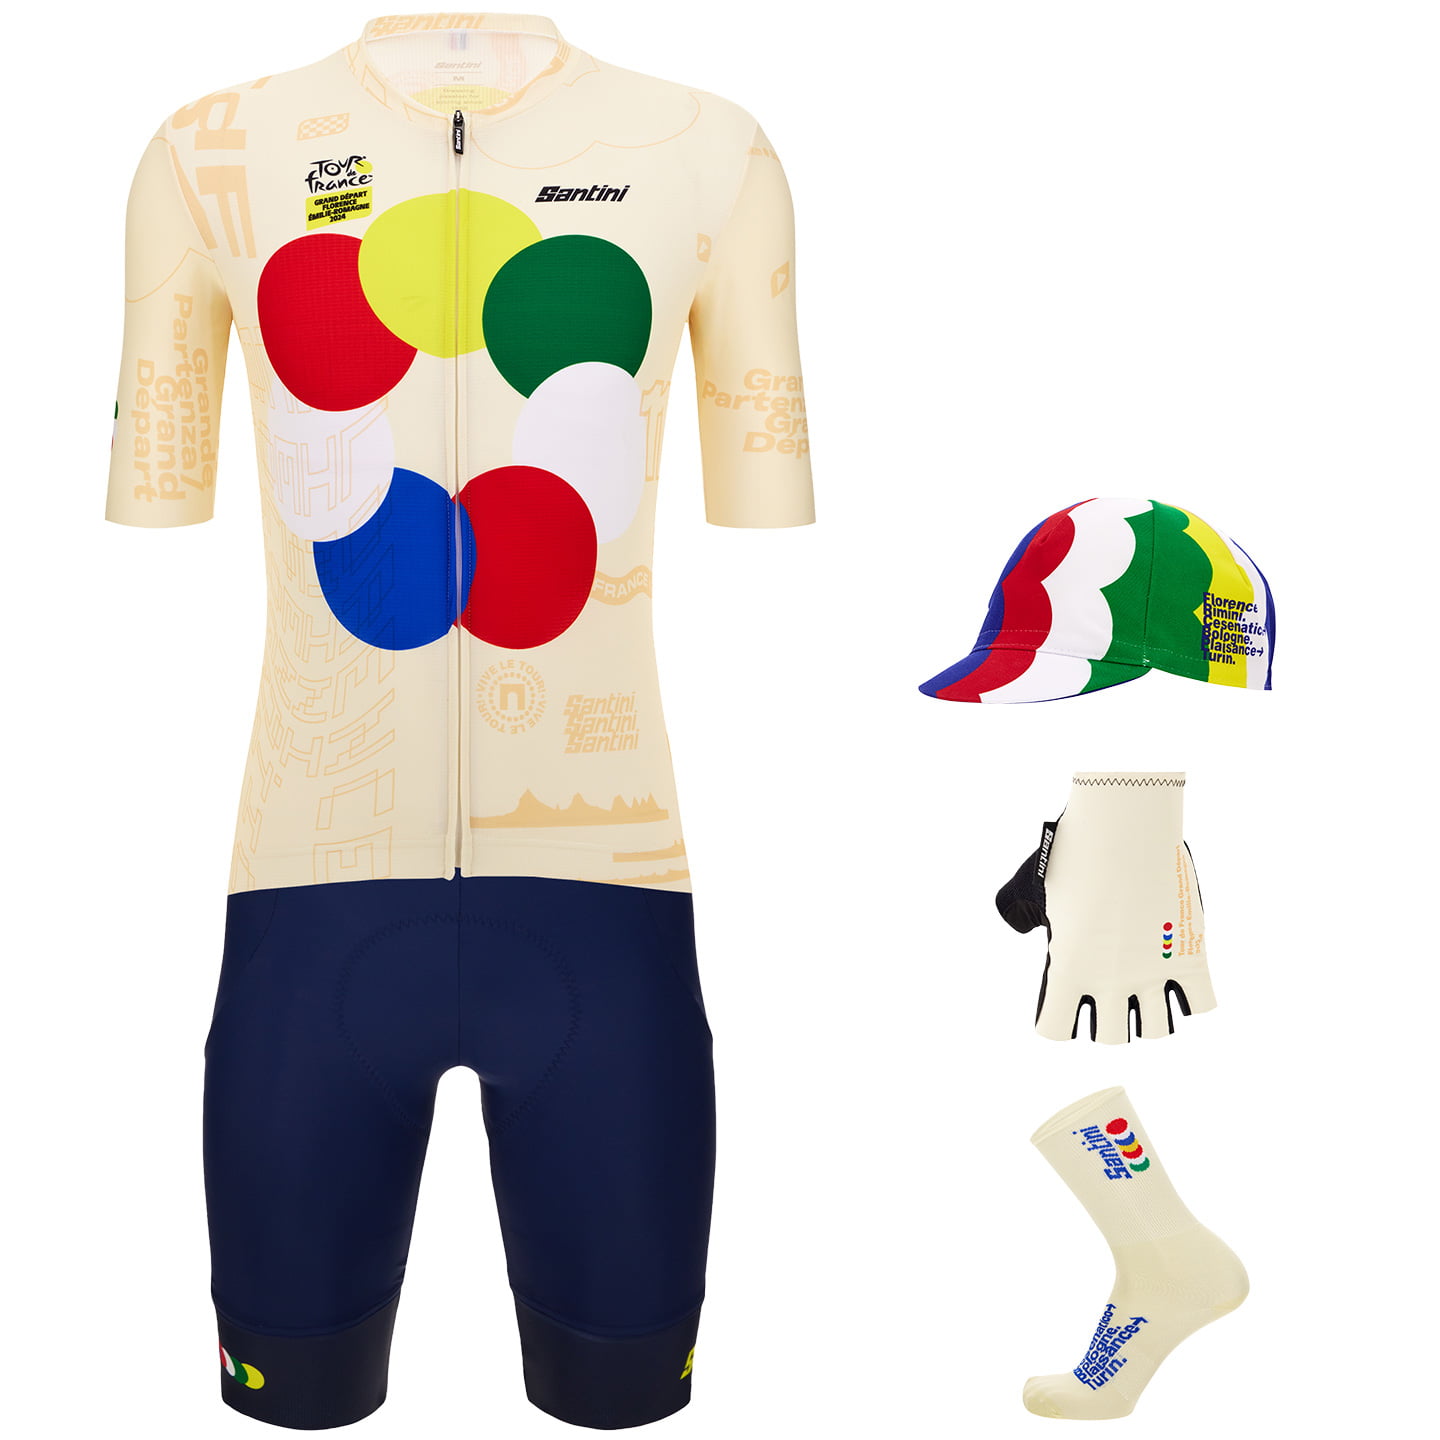 TOUR DE FRANCE Grand Depart Florence 2024 Maxi-Set (5 pieces), for men, Cycling clothing